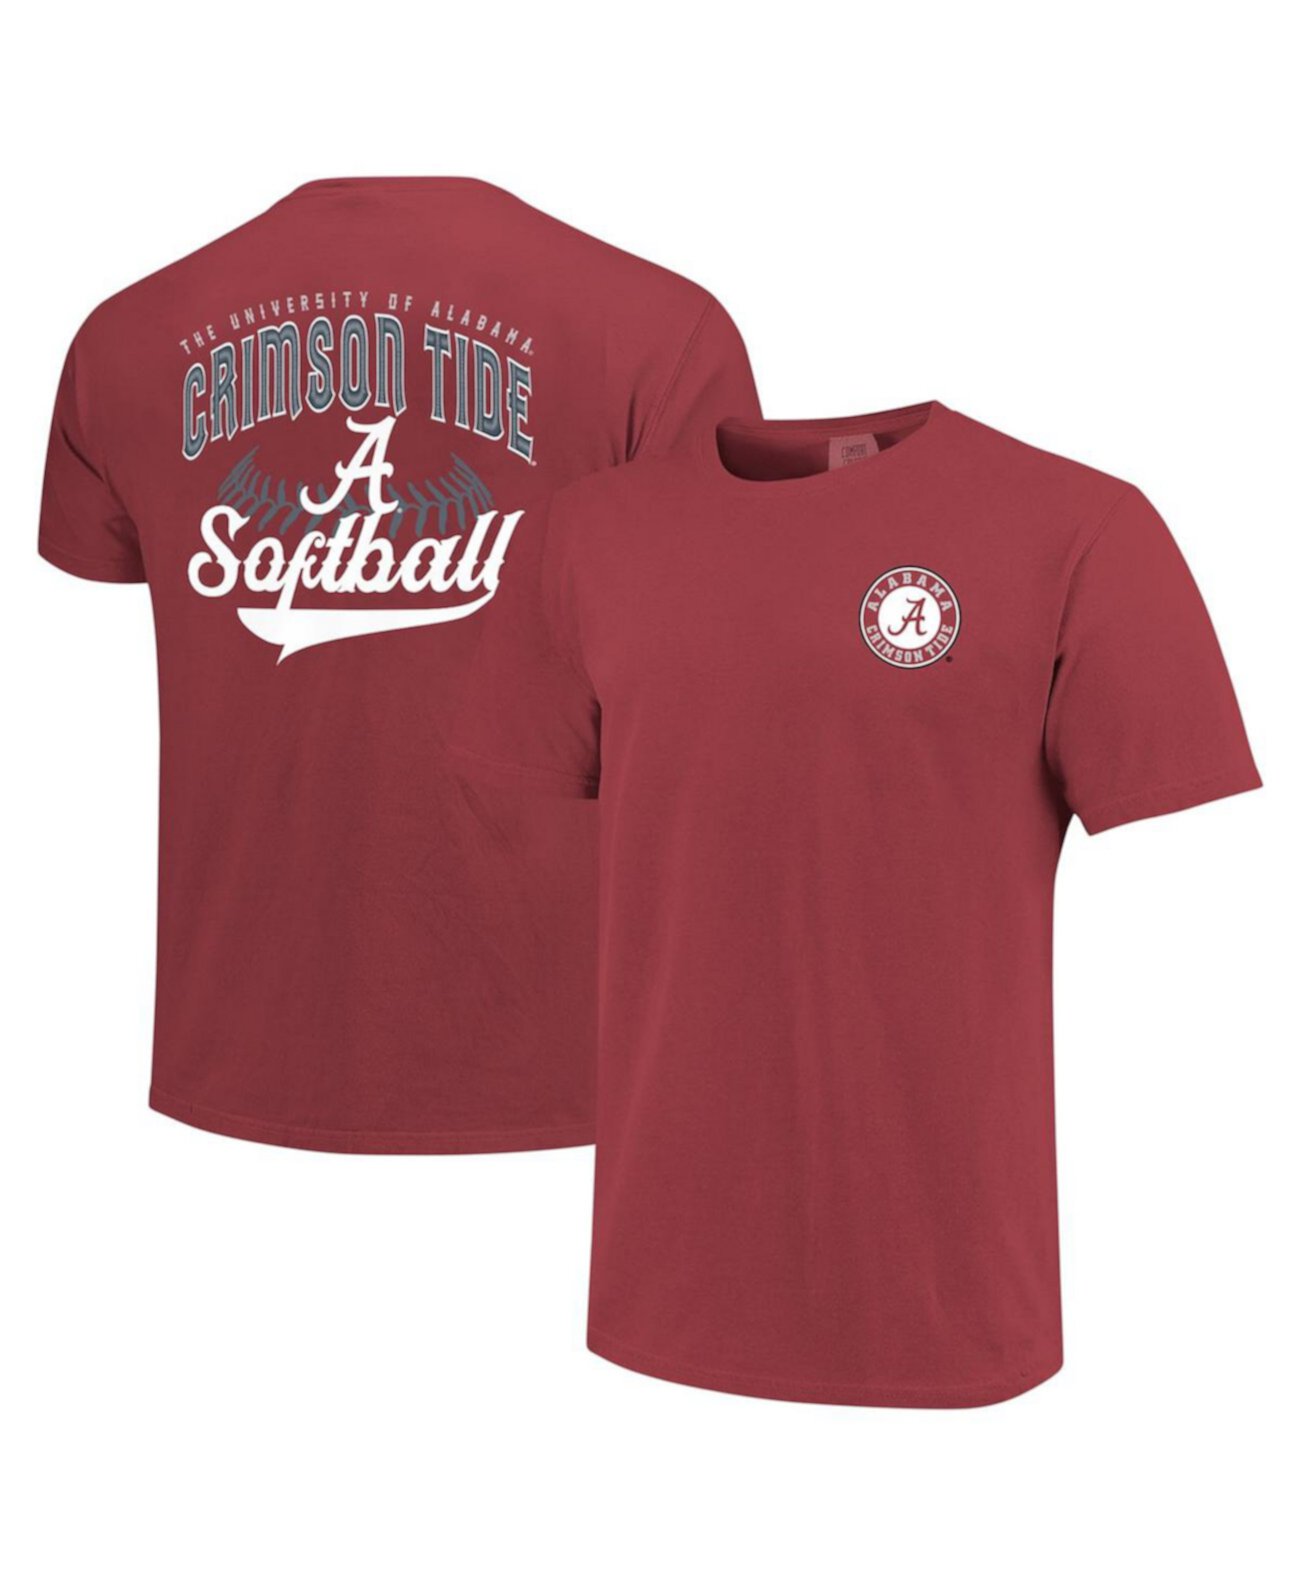 Men's Crimson Alabama Crimson Tide Softball Walk Off T-Shirt Image One